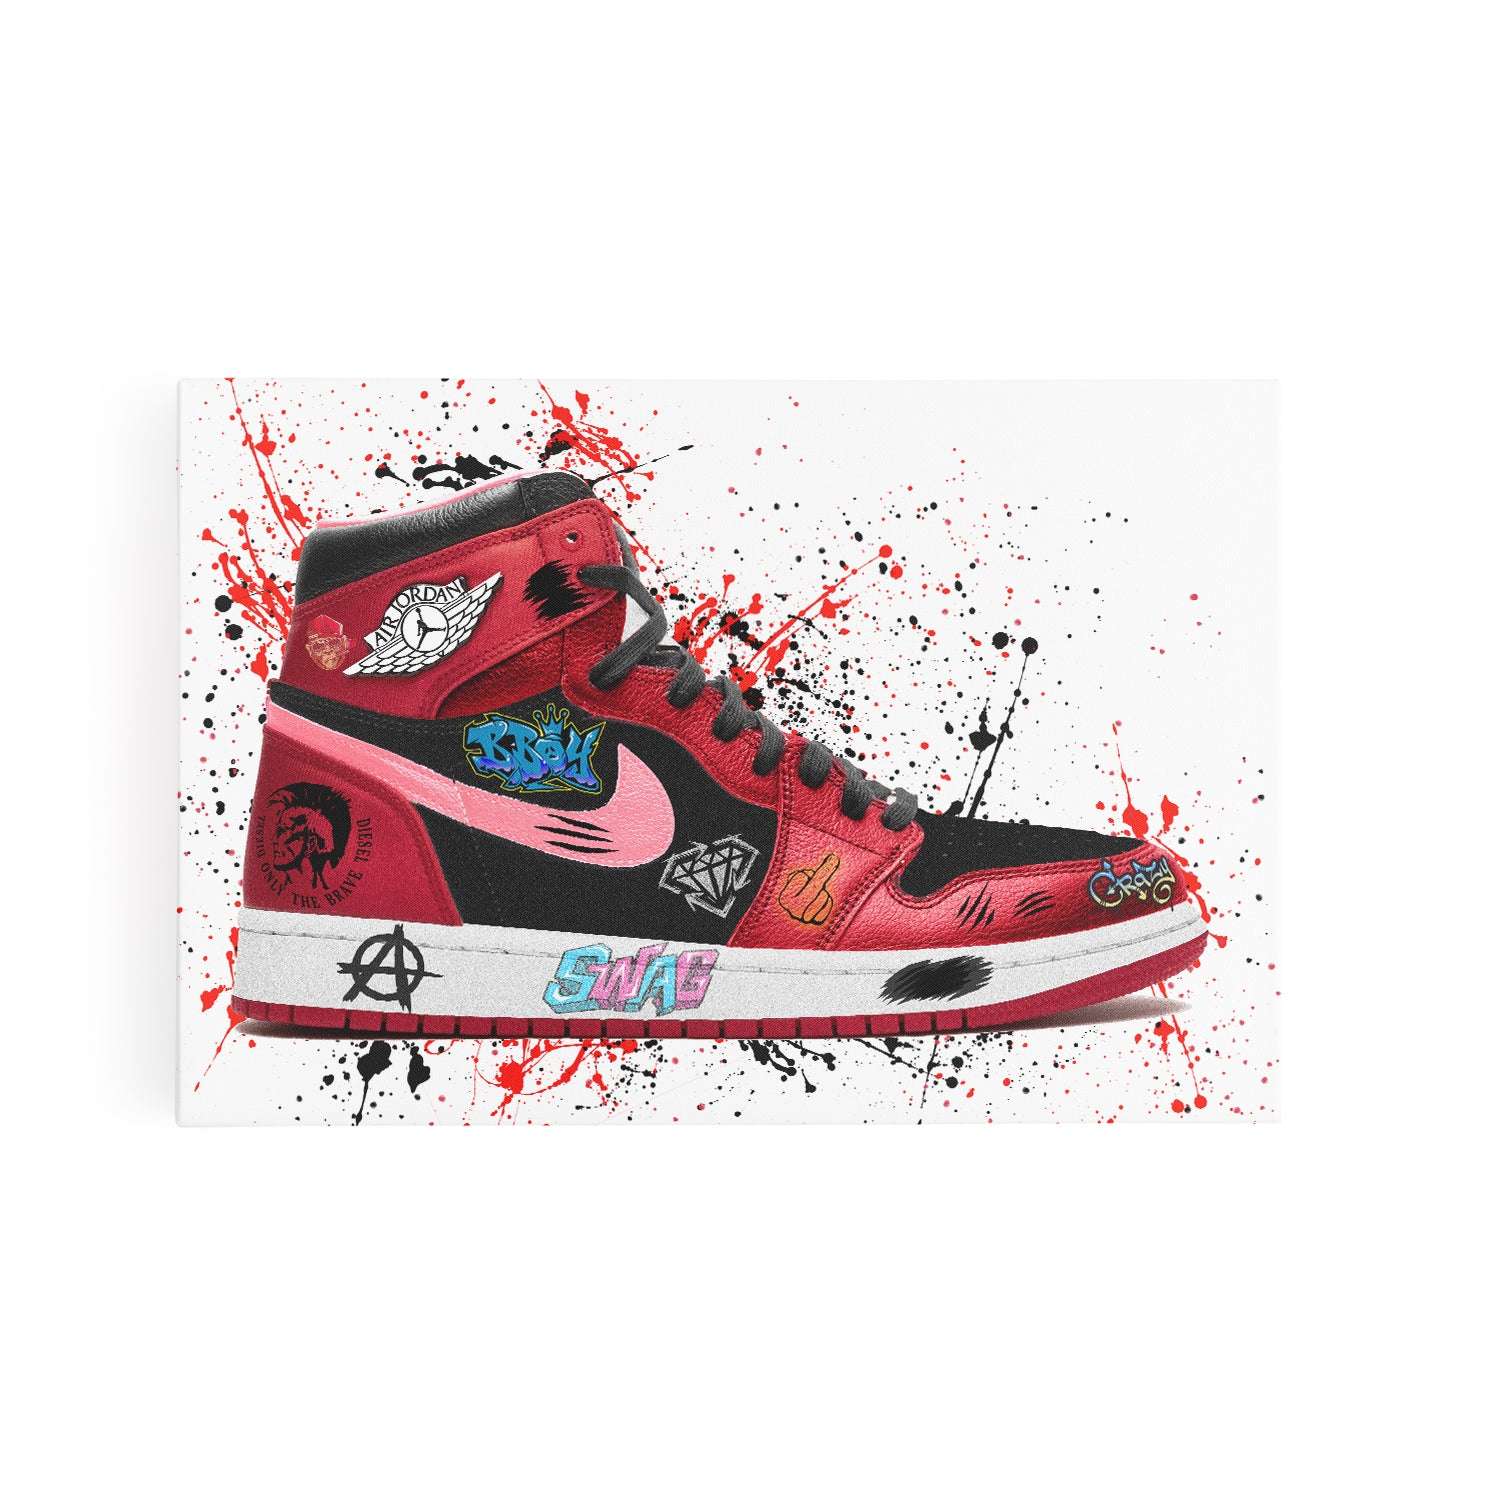 Red Nike Jordan Air Graffiti Sneaker